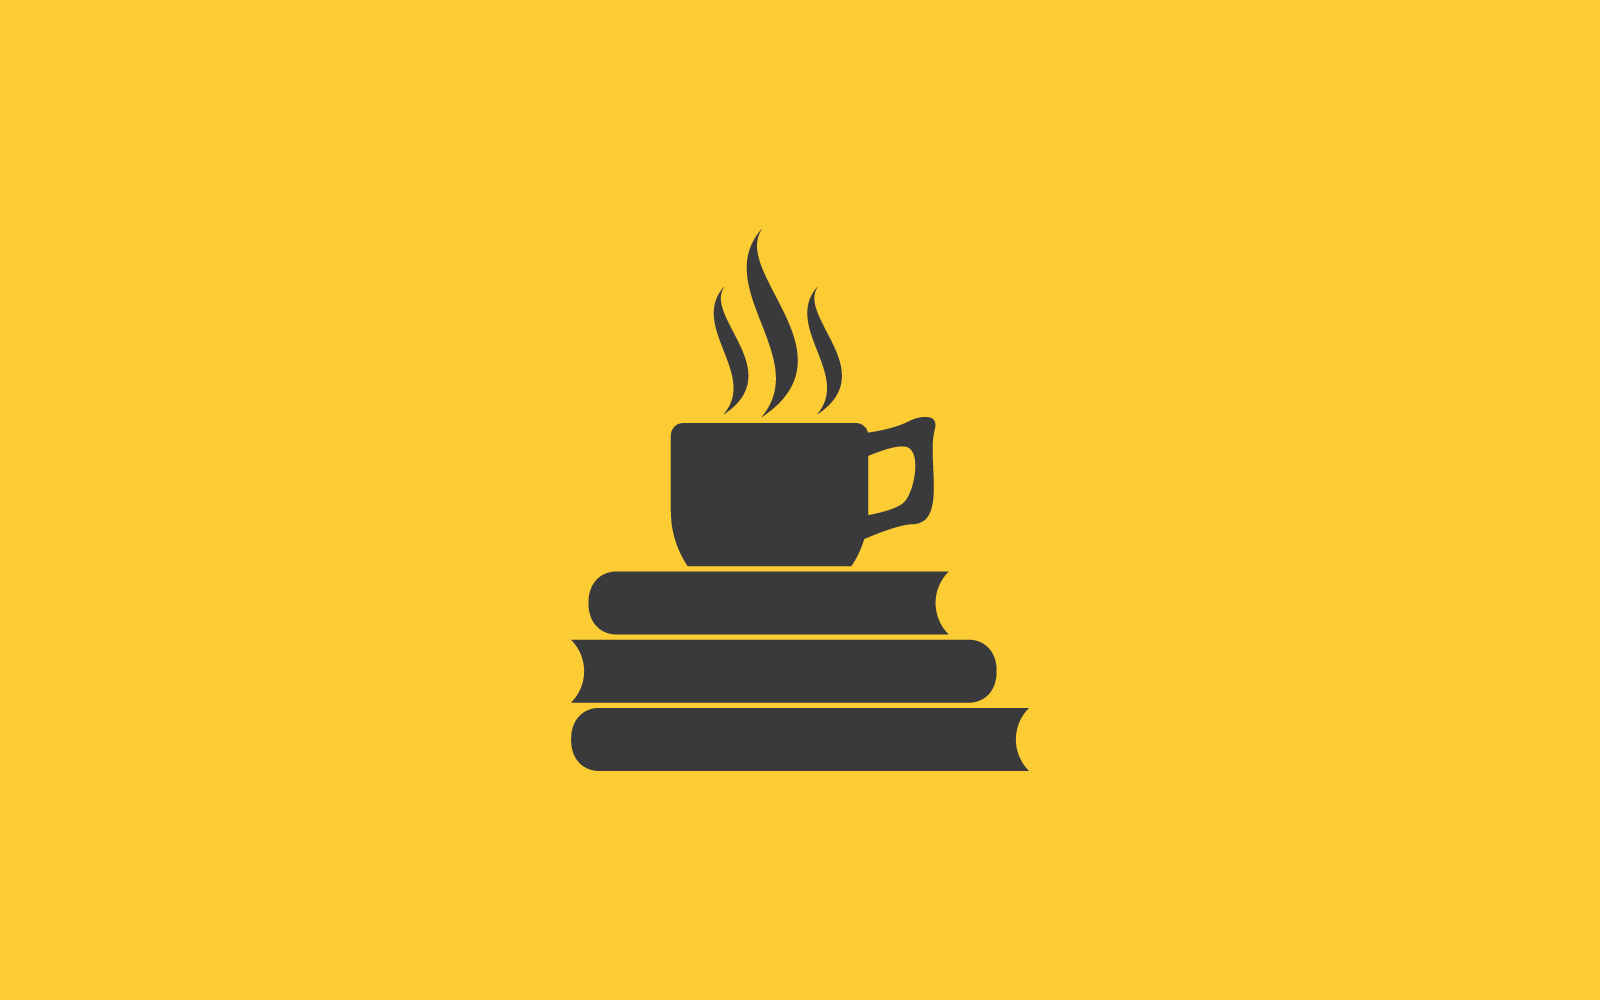 Coffee and book logo vector design template